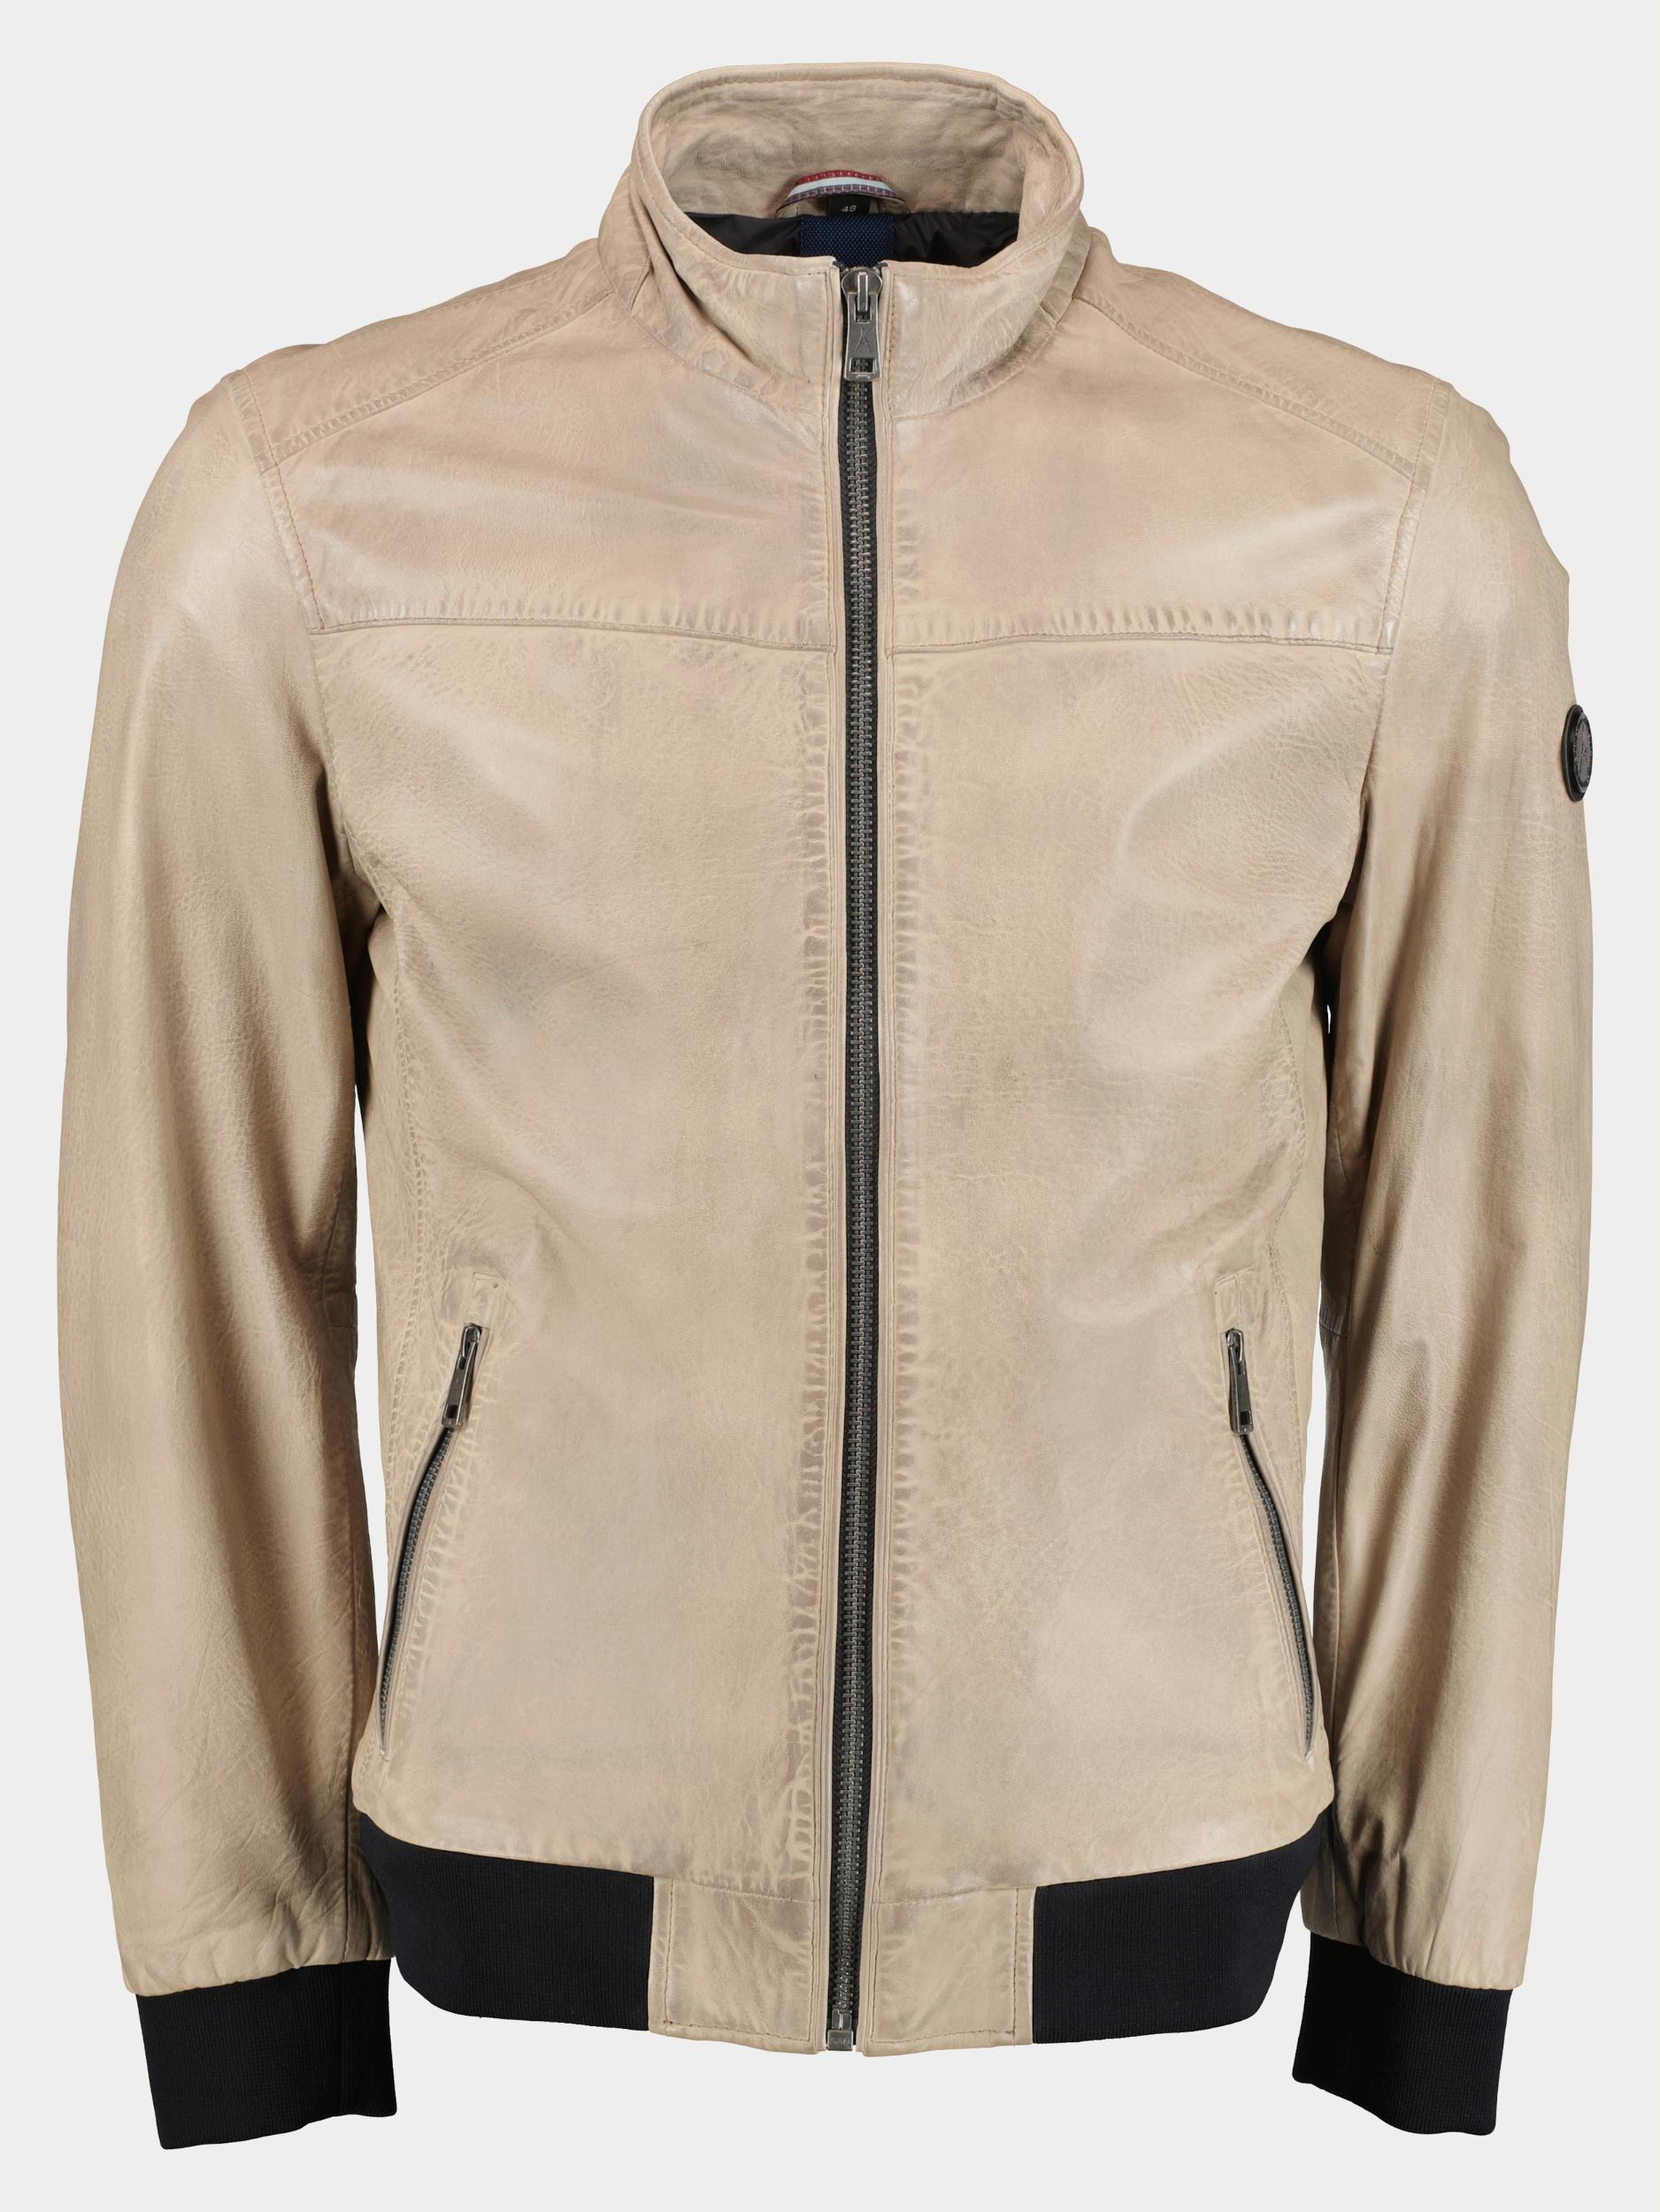 Afbeelding van DNR Lederen jack leather jacket 52284/140